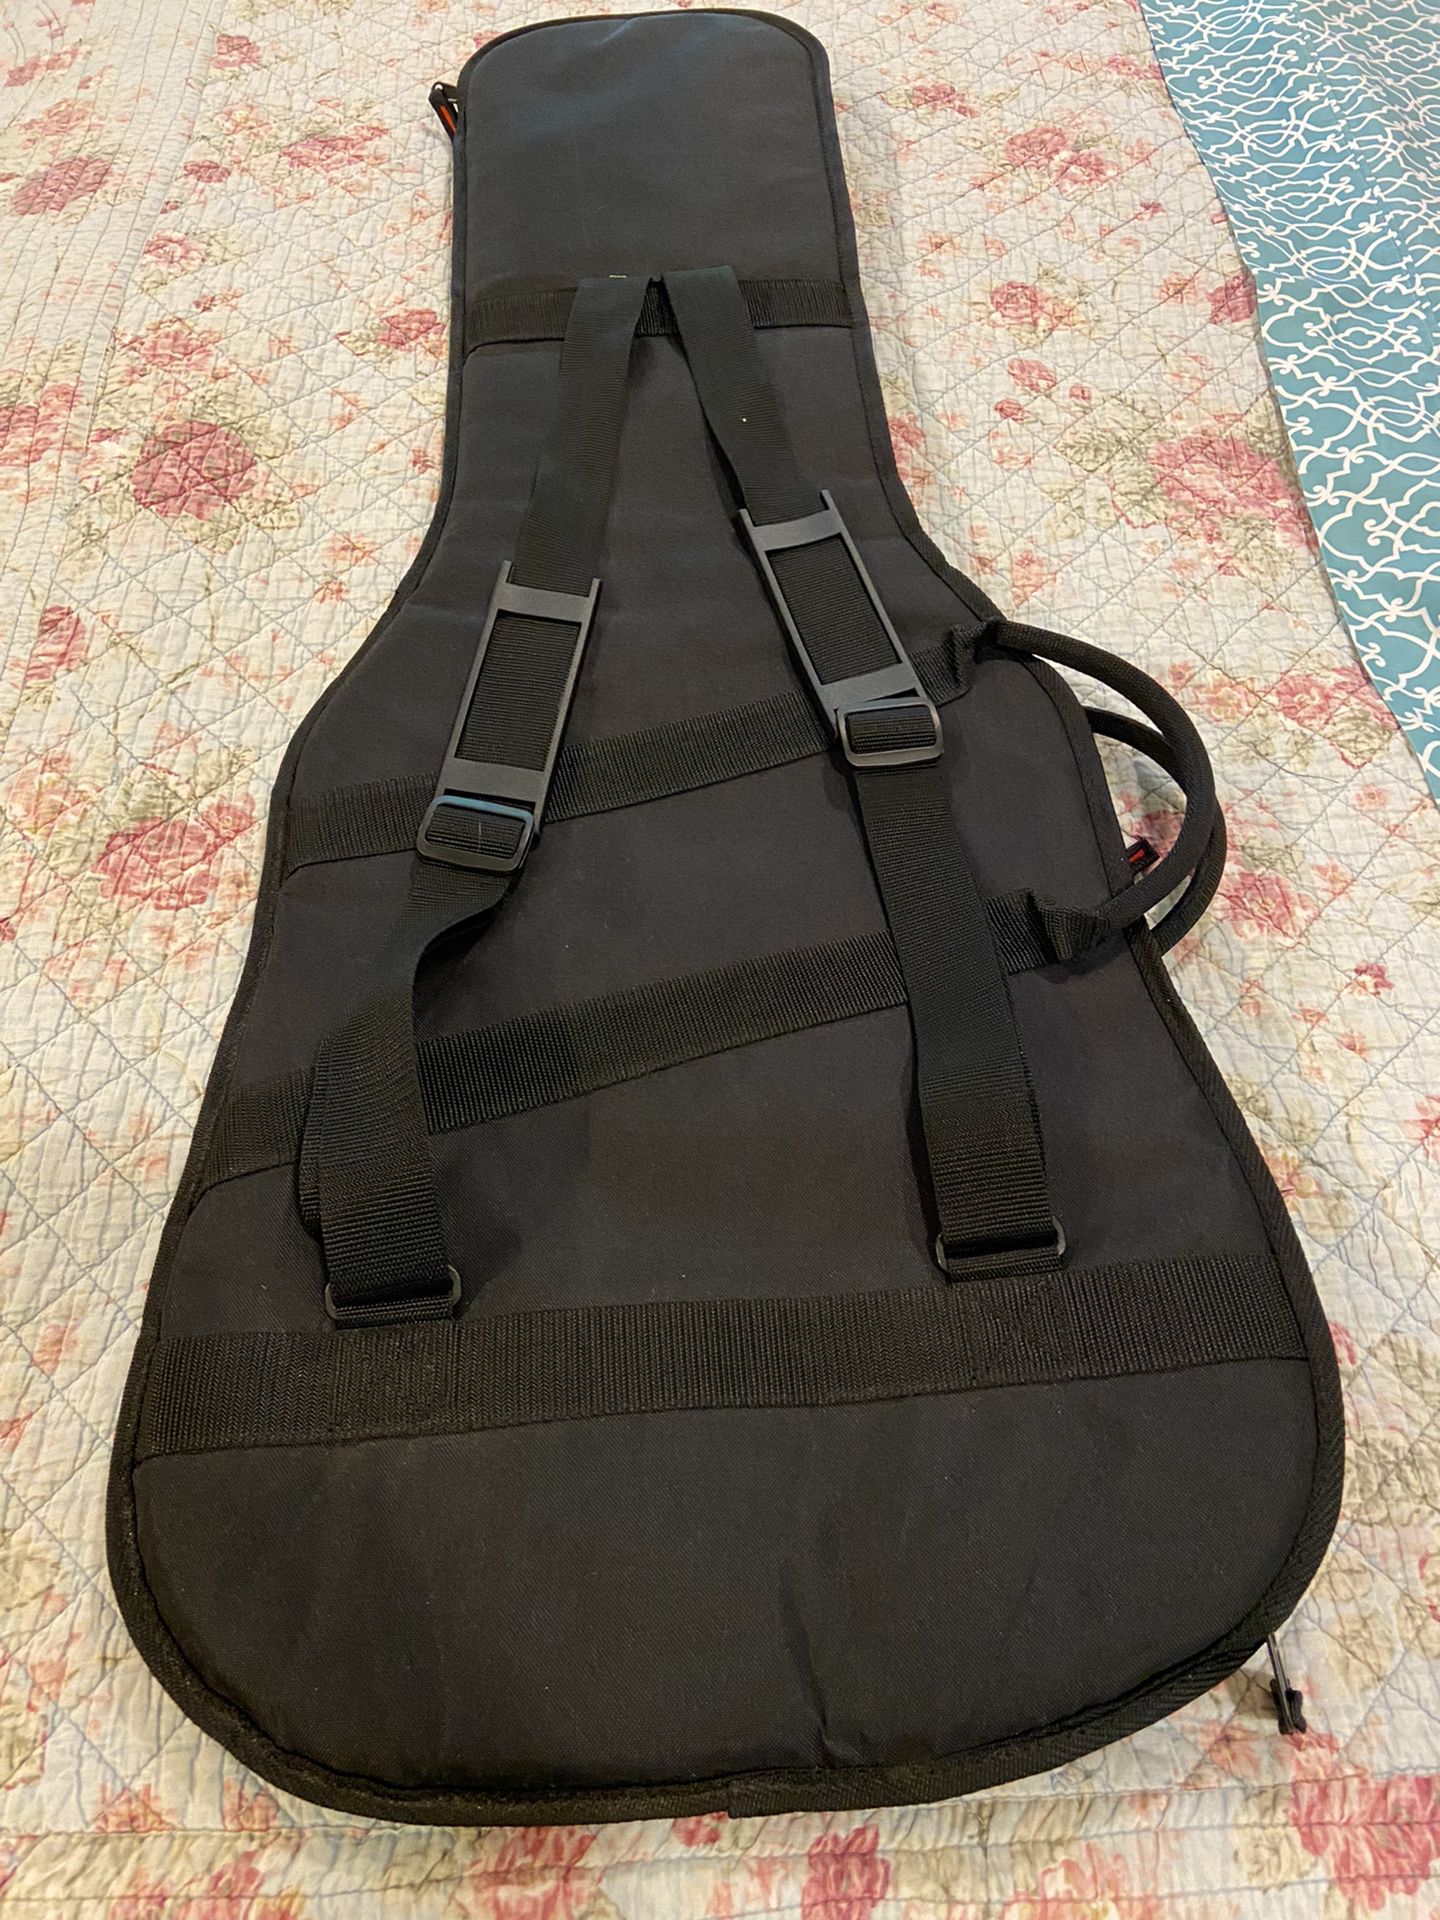 NEW Gator Case Guitar Gig Bag for Electric Guitar